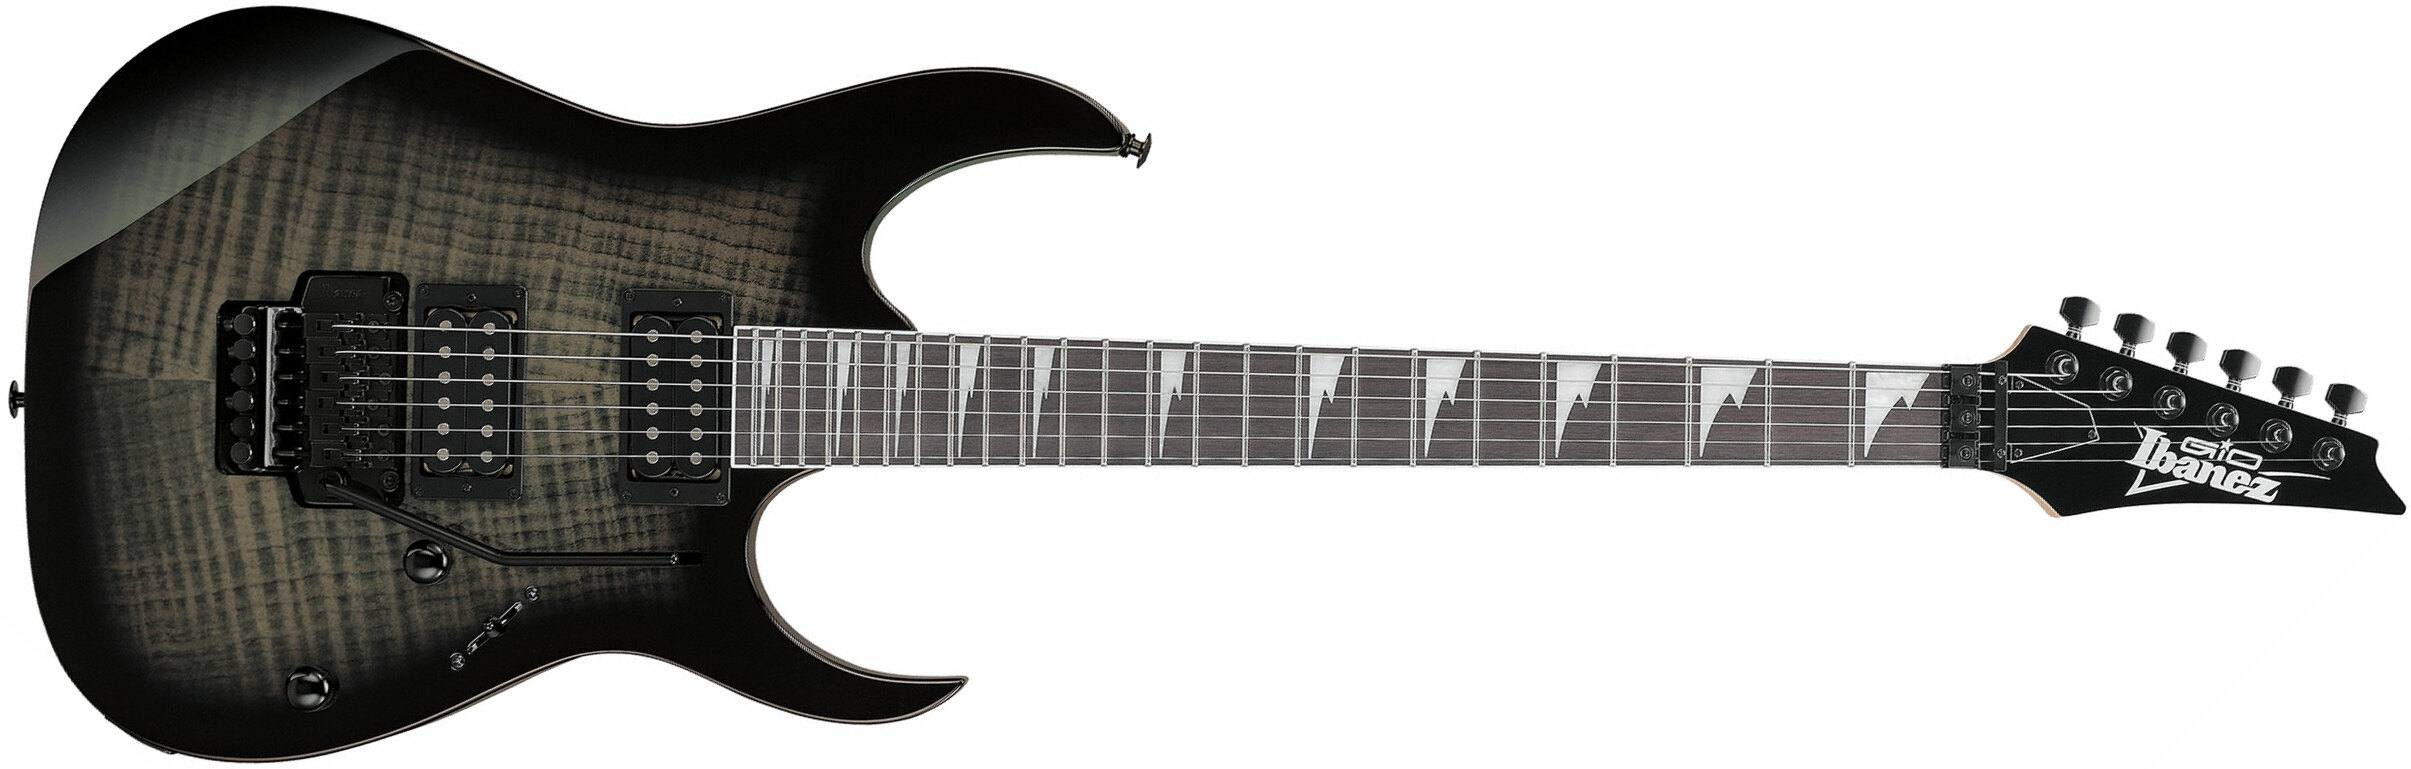 Ibanez Grg320fa Tks Gio 2h Fr Pur - Transparent Black Sunburst - Guitarra eléctrica con forma de str. - Main picture